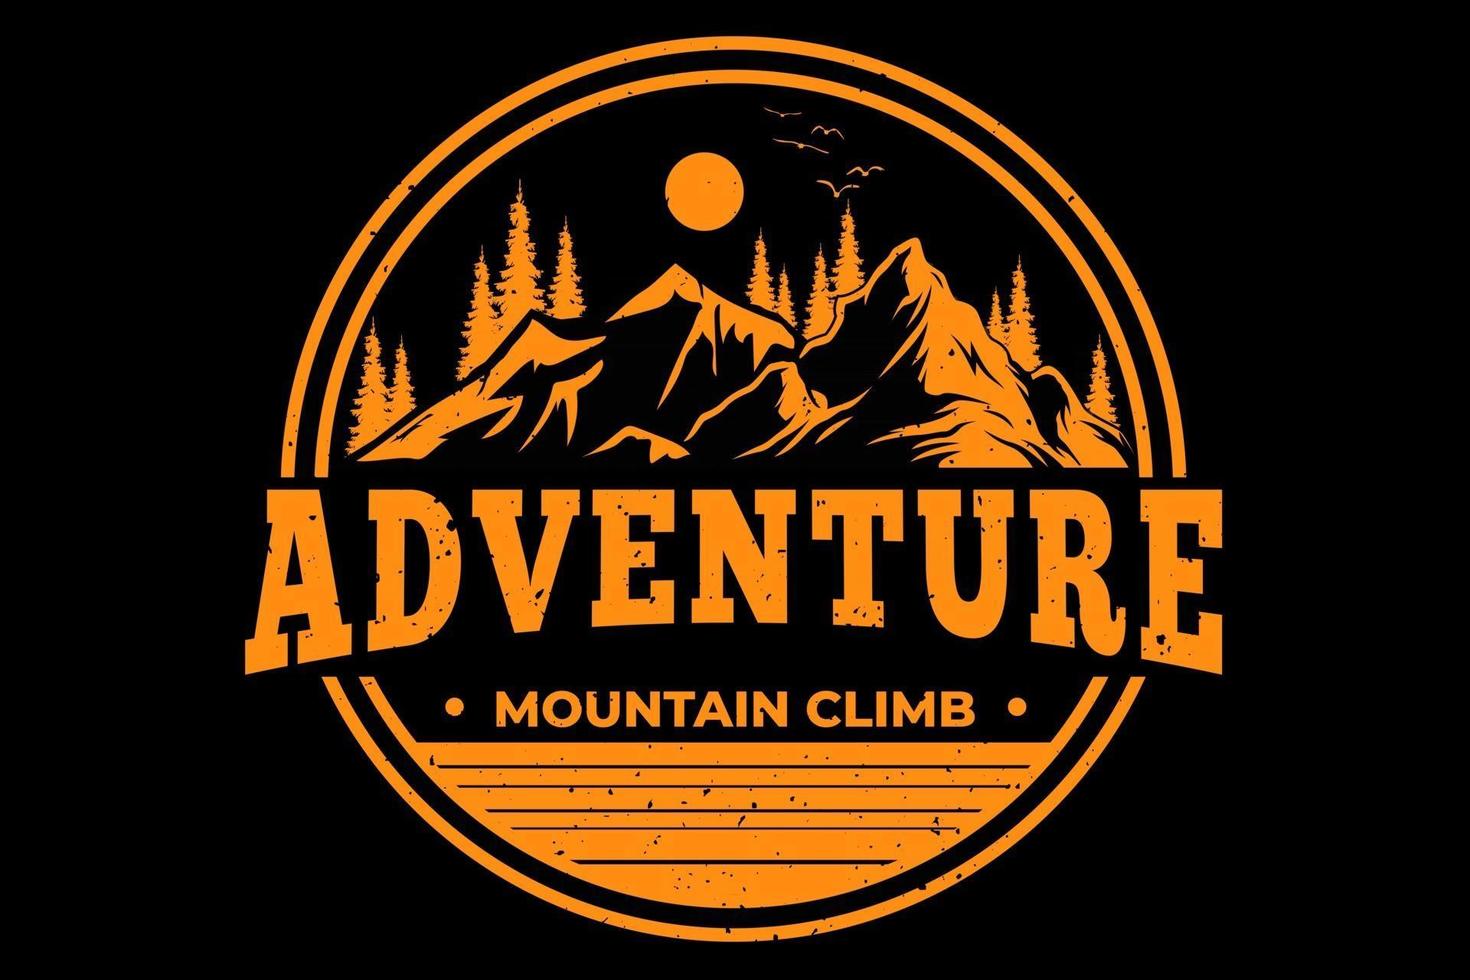 T-shirt adventure mountain climb vintage style vector